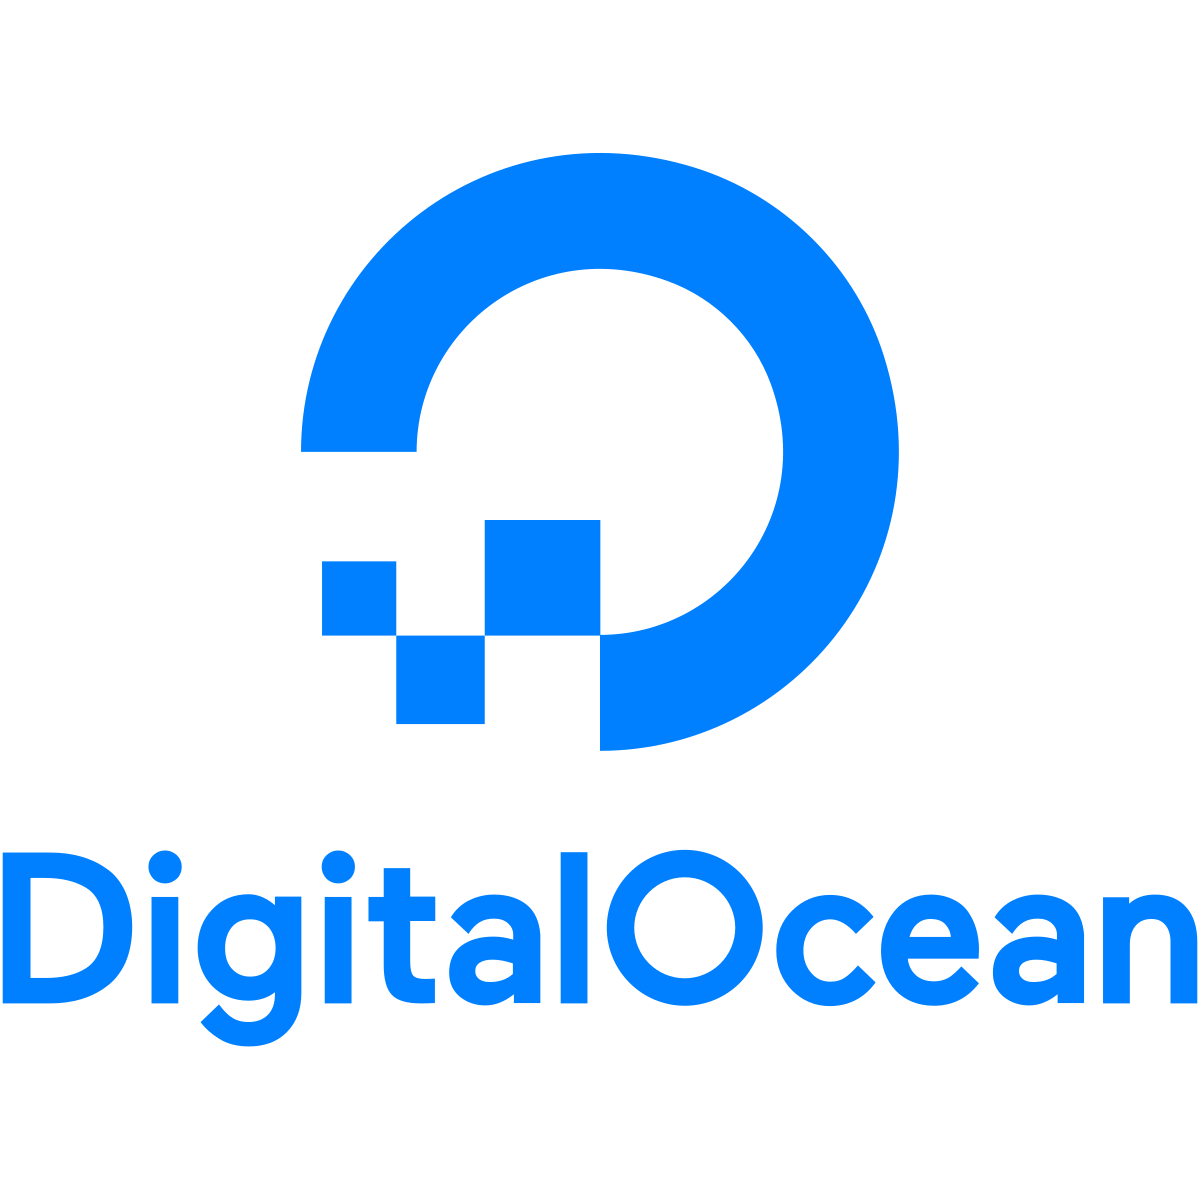 Digital Ocean logo software development